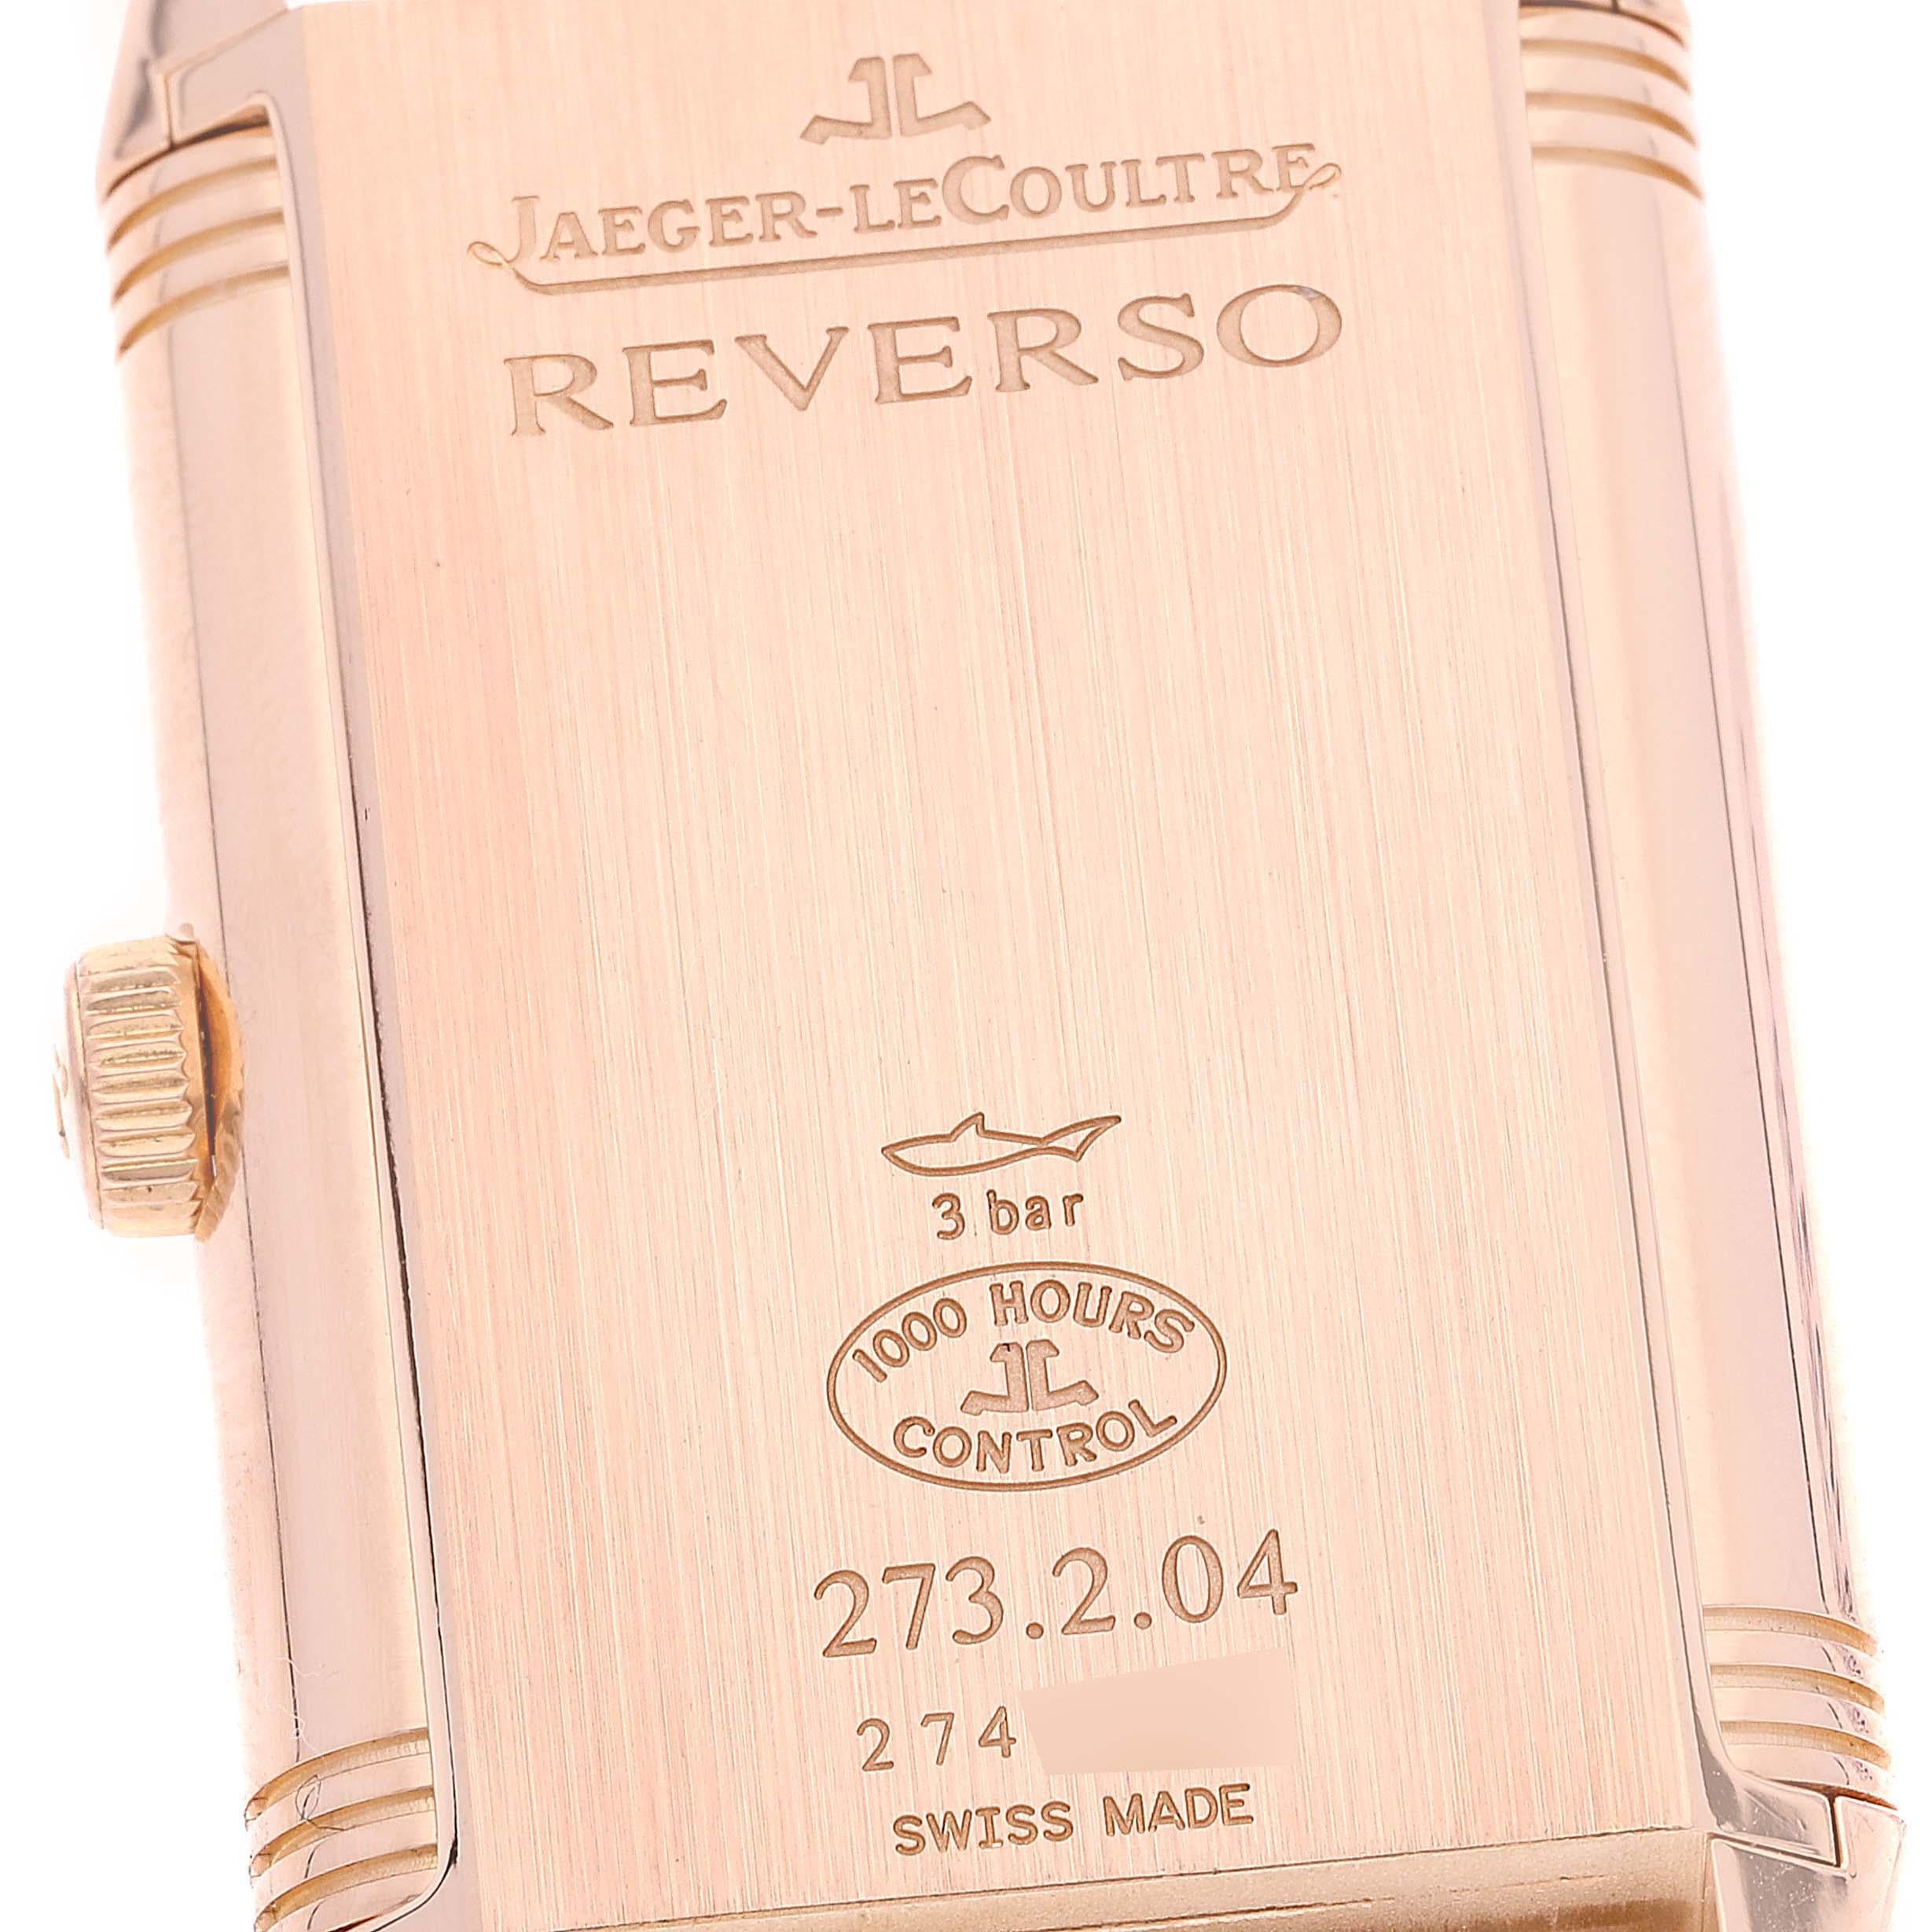 Jaeger LeCoultre Grande Reverso 976 Rose Gold Watch 273.2.04 Q3732420 4